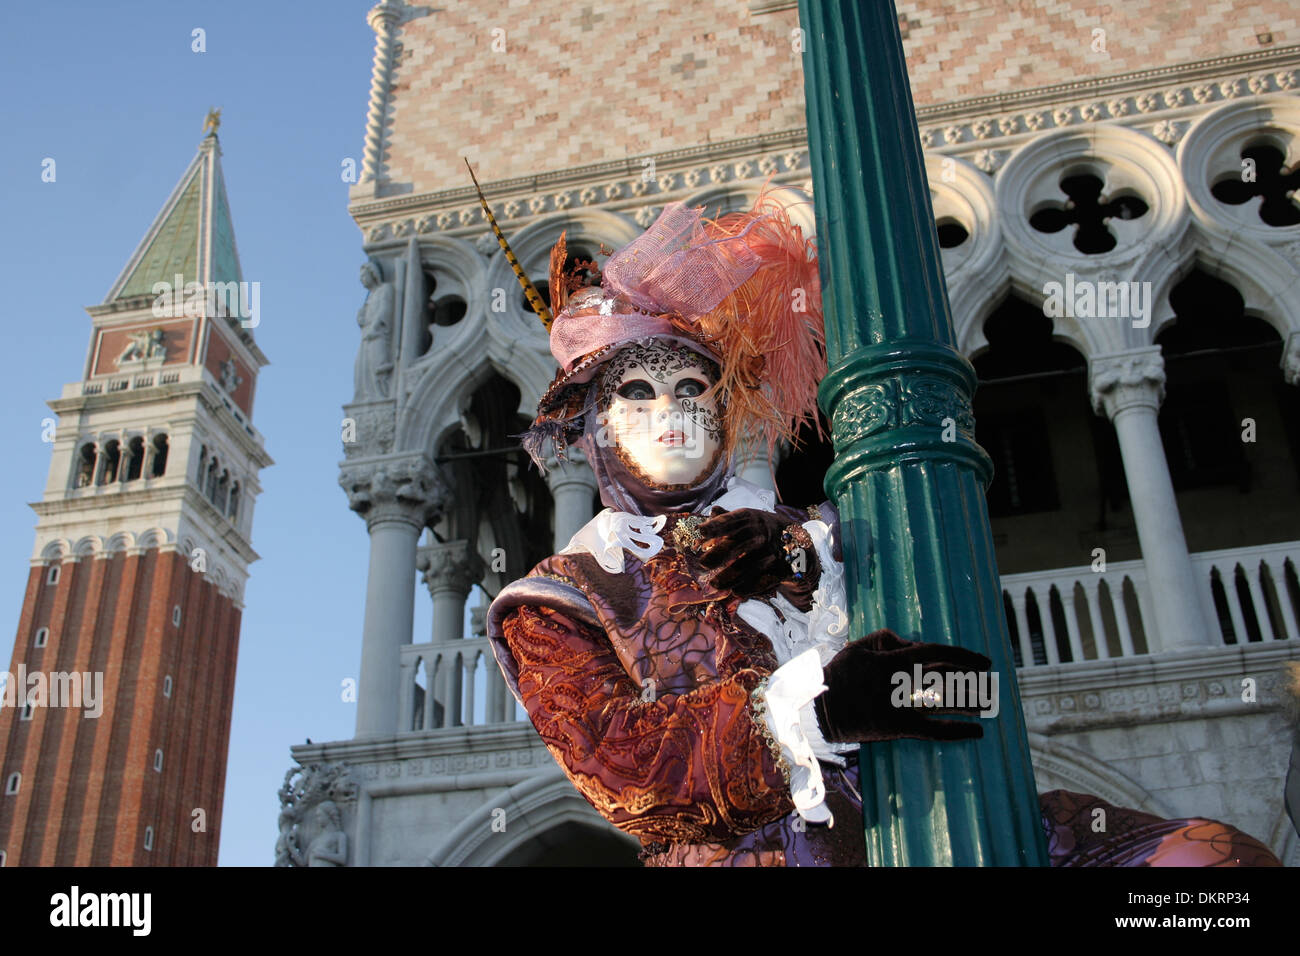 Woman in carnival costume, Venice, Italy Stock Photo